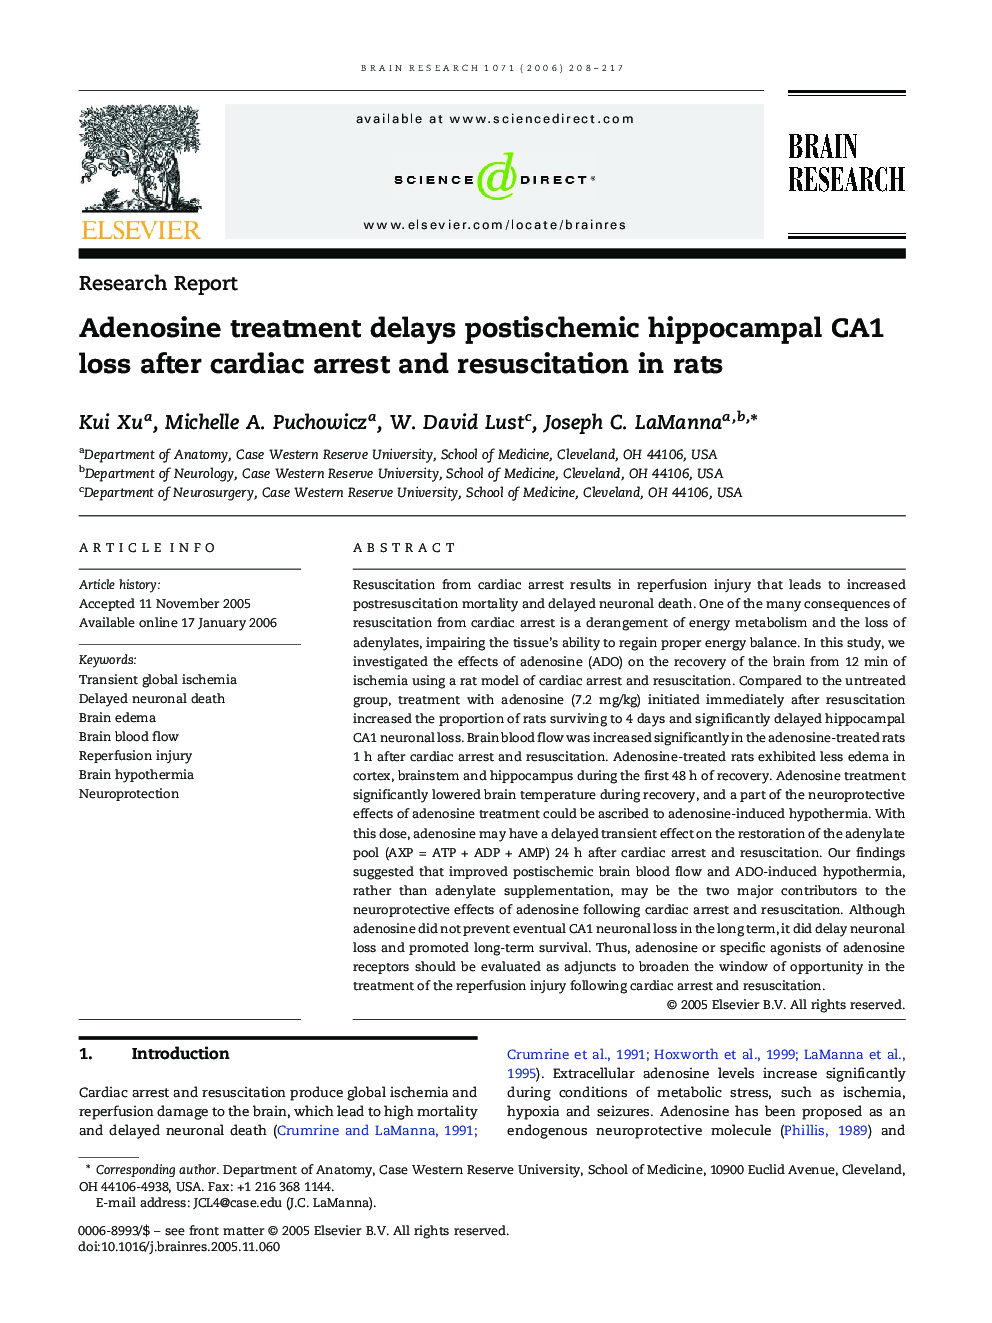 Adenosine treatment delays postischemic hippocampal CA1 loss after cardiac arrest and resuscitation in rats